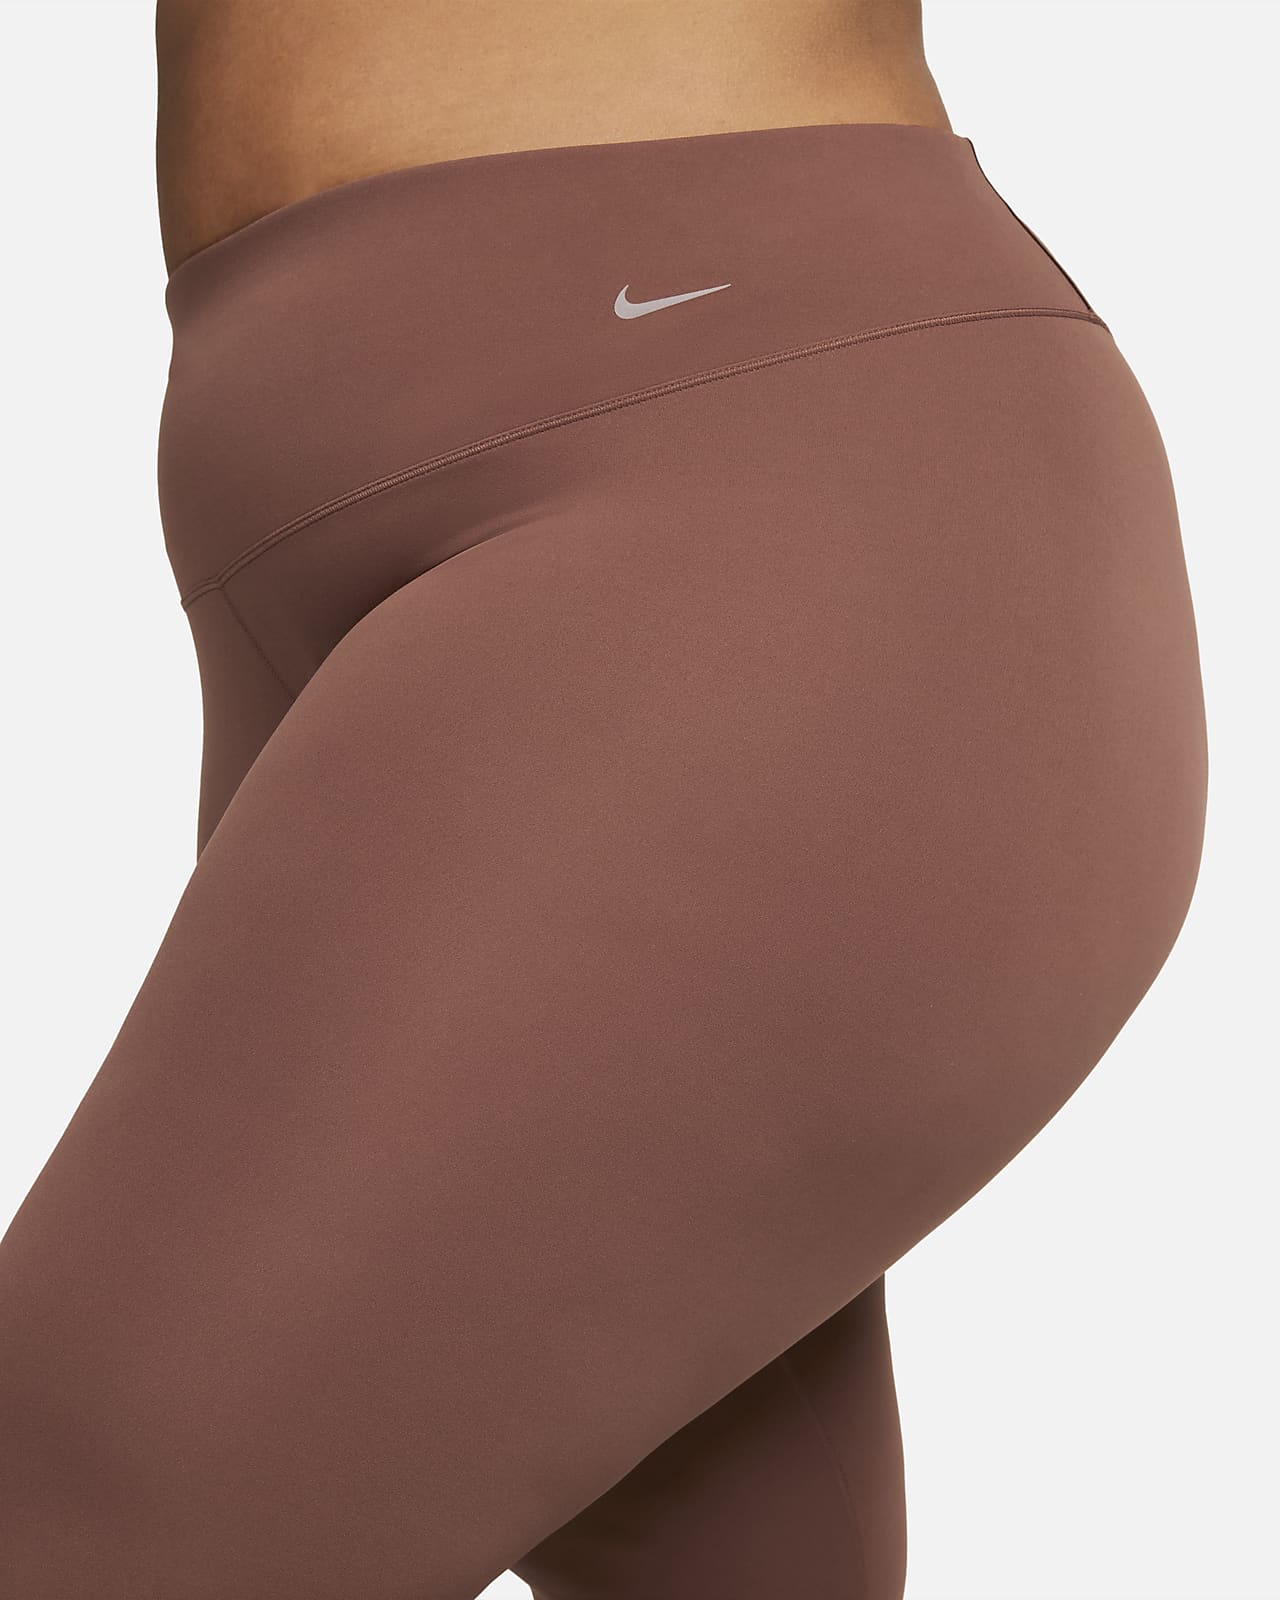 Nike Women's Essential Black/Metallic HW Printed Leggings (DM4610-010)  S/M/L/XL